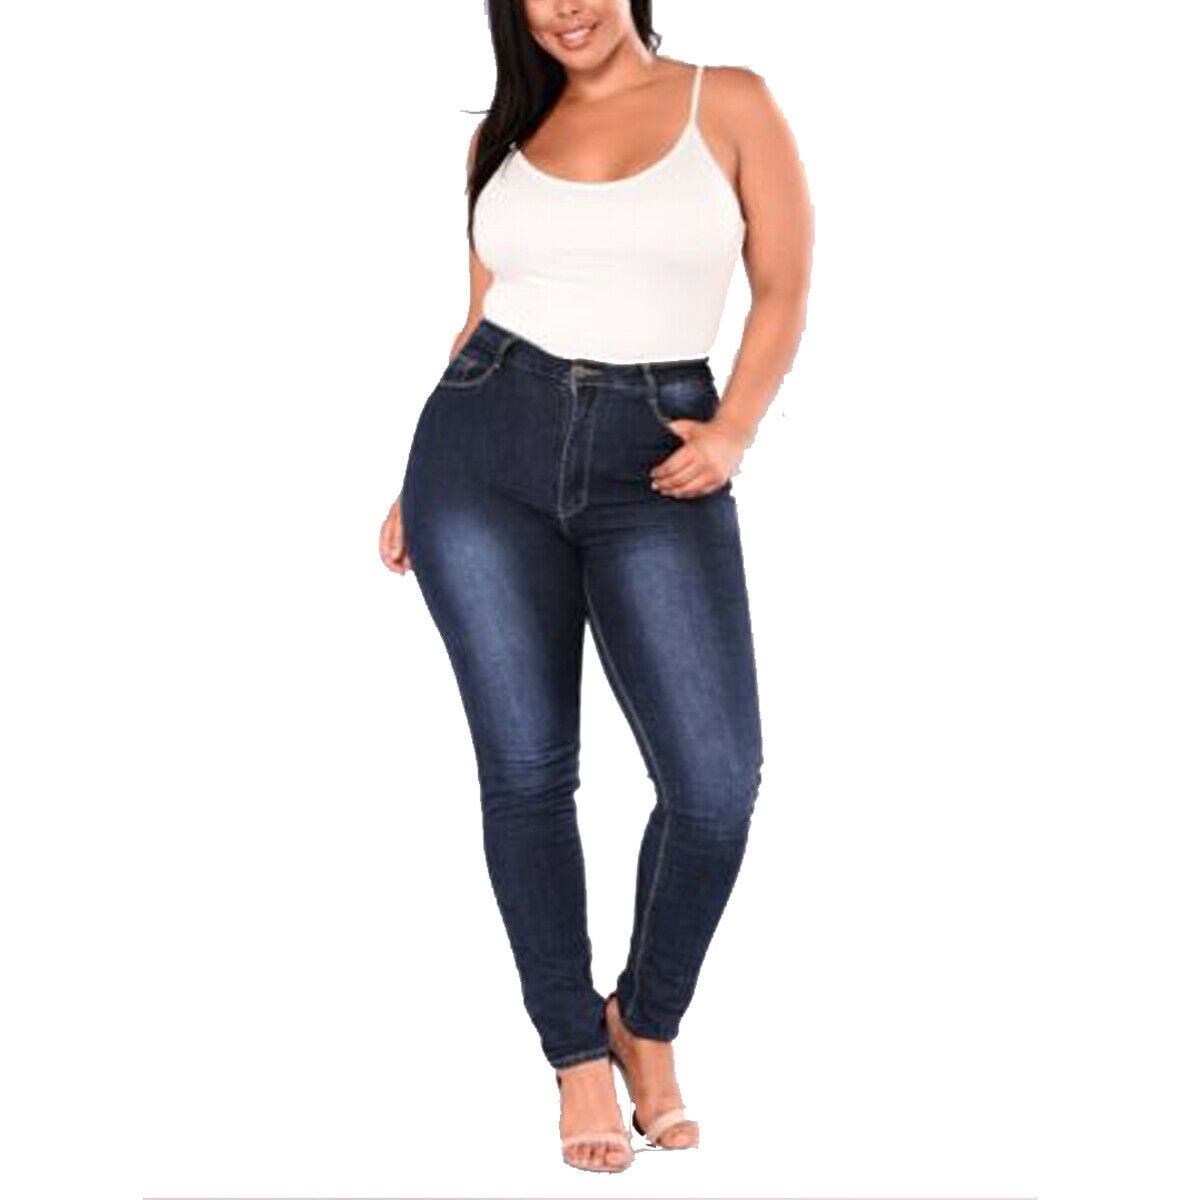 stretch jean leggings plus size